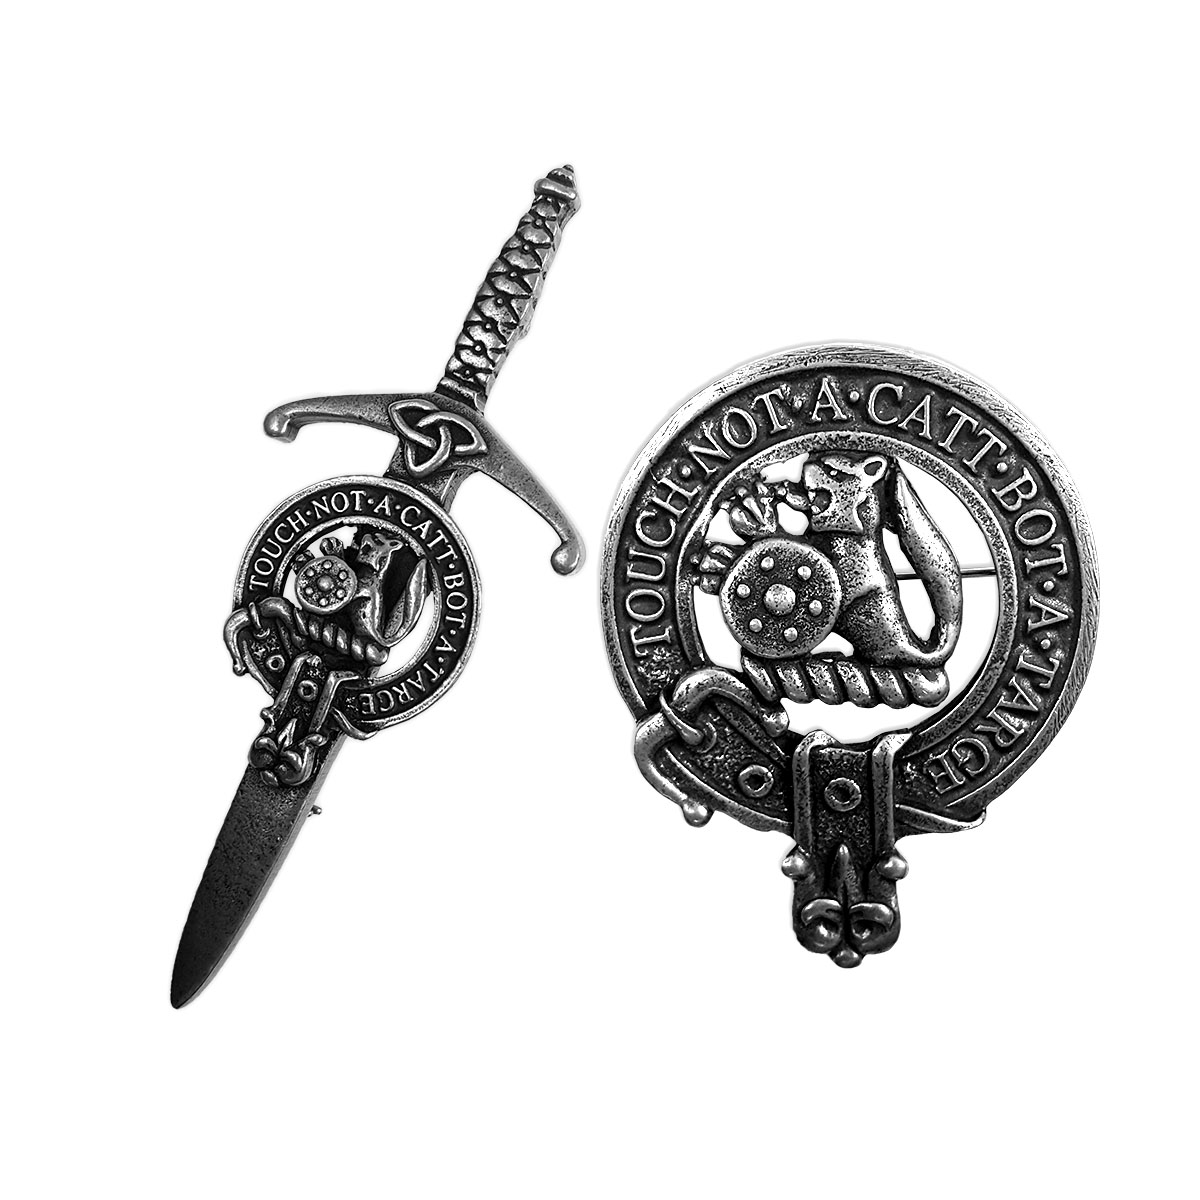 Murray of Atholl Scottish Clan Crest Pewter Badge or Kilt Pin 